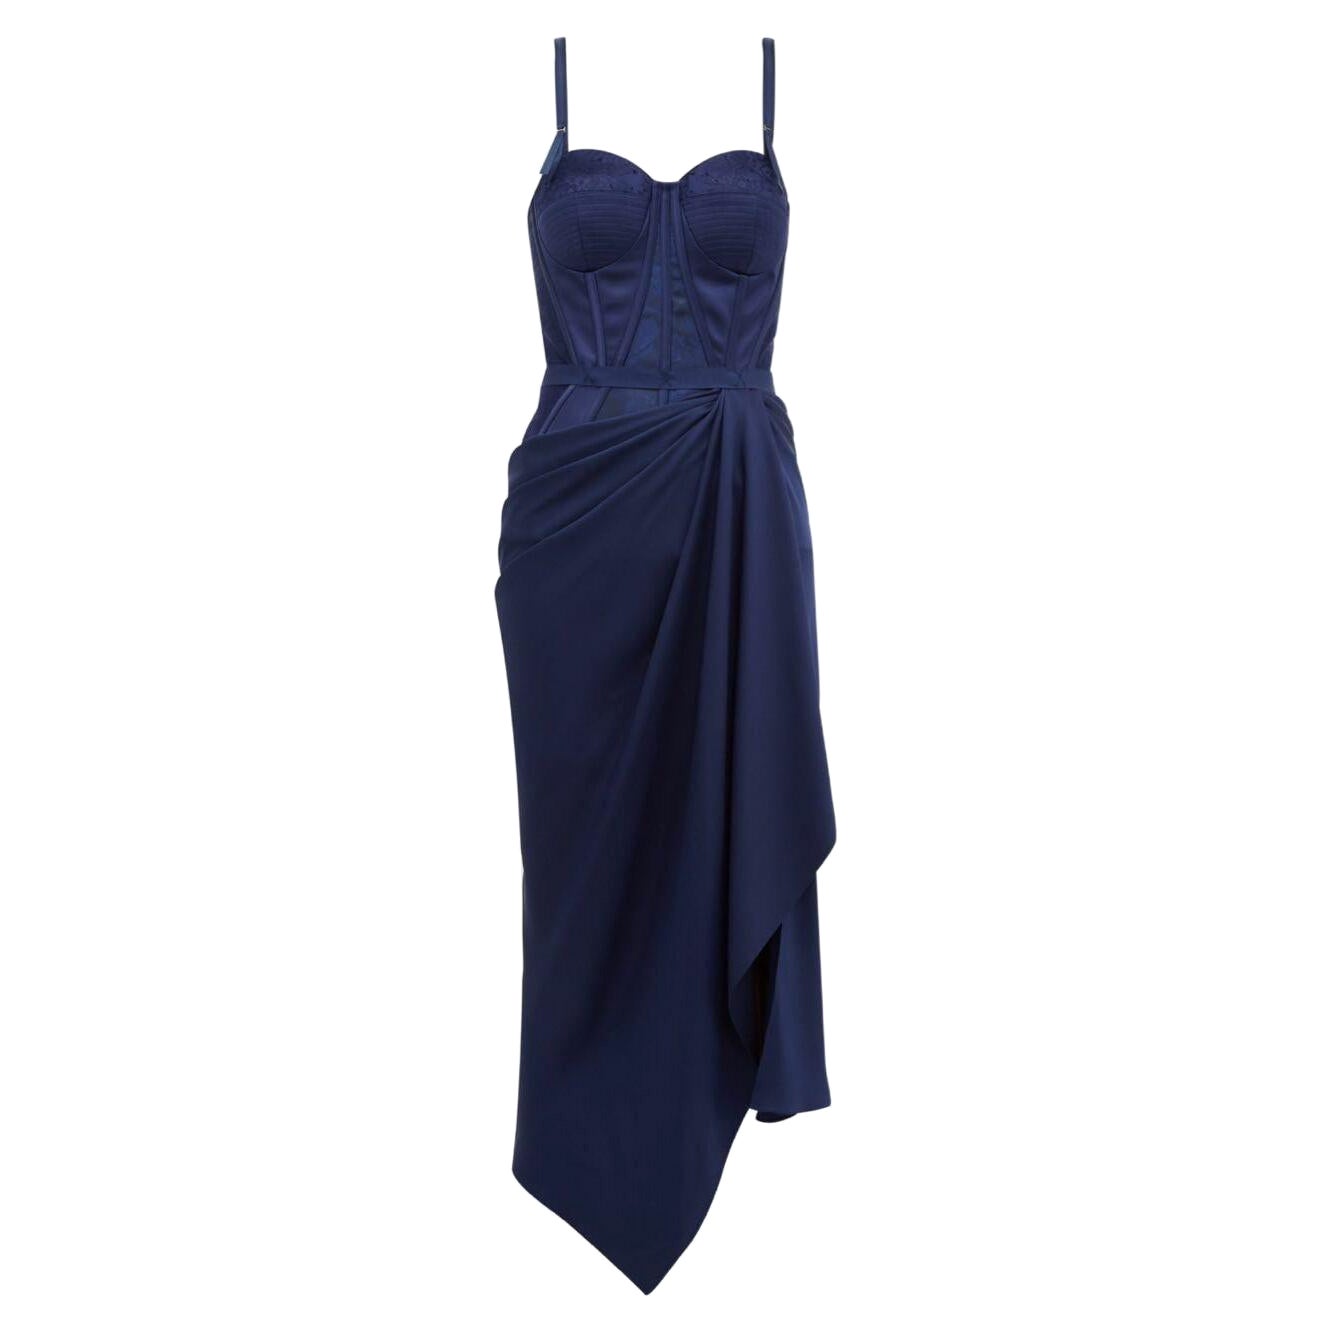 dark blue corset dress